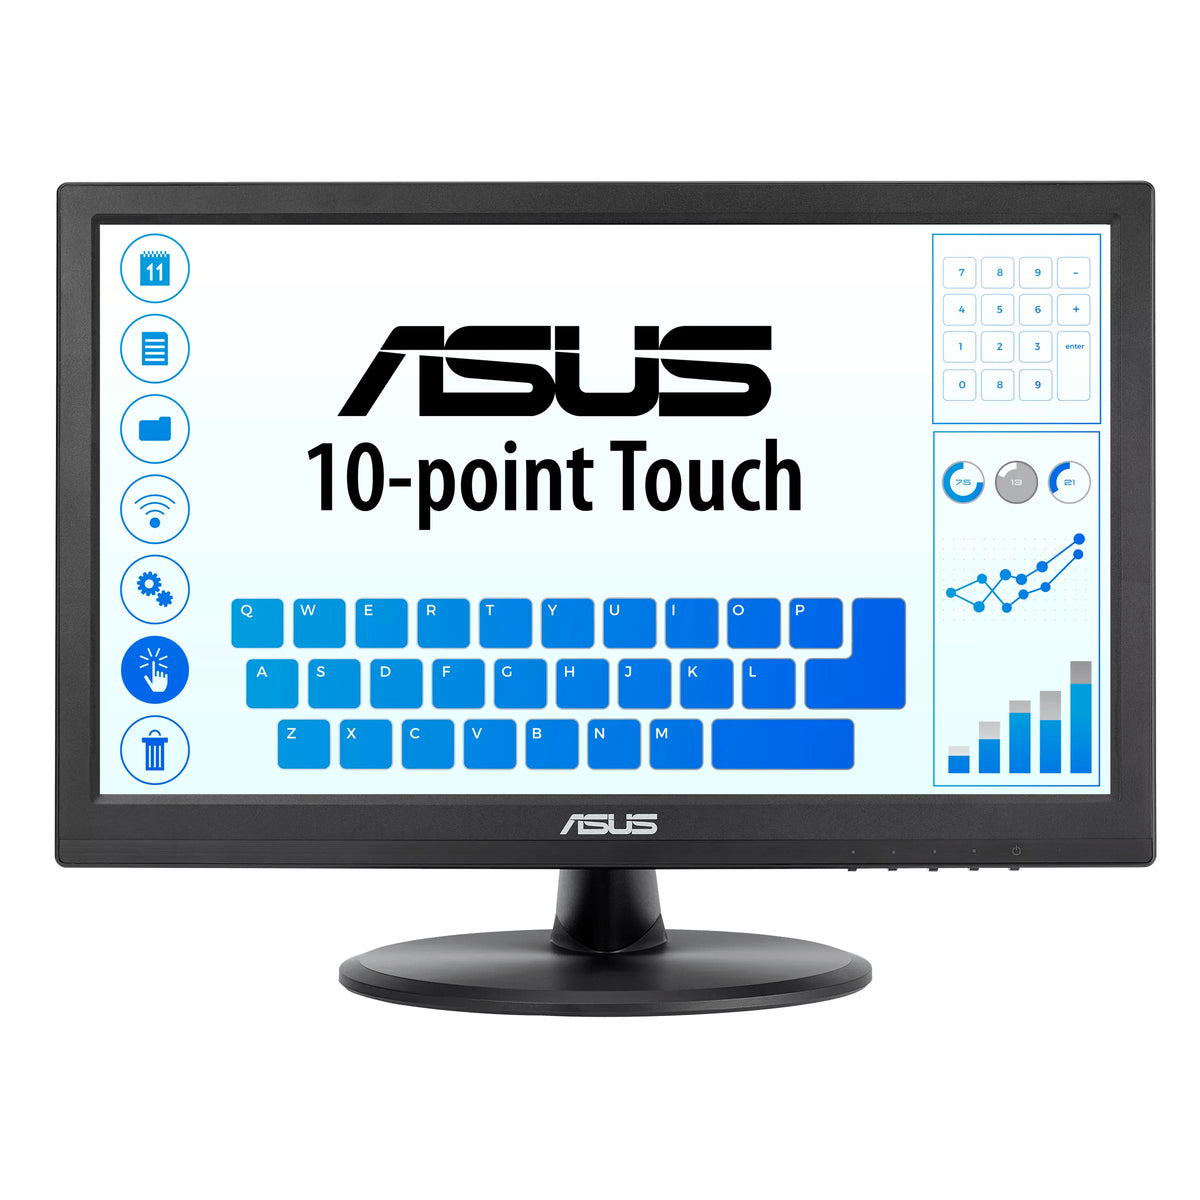 ASUS VT168HR - LED Monitor - 15.6" - touch screen - 1366 x 768 WXGA @ 60 Hz - TN - 220 cd/m² - 400:1 - 5 ms - HDMI, VGA